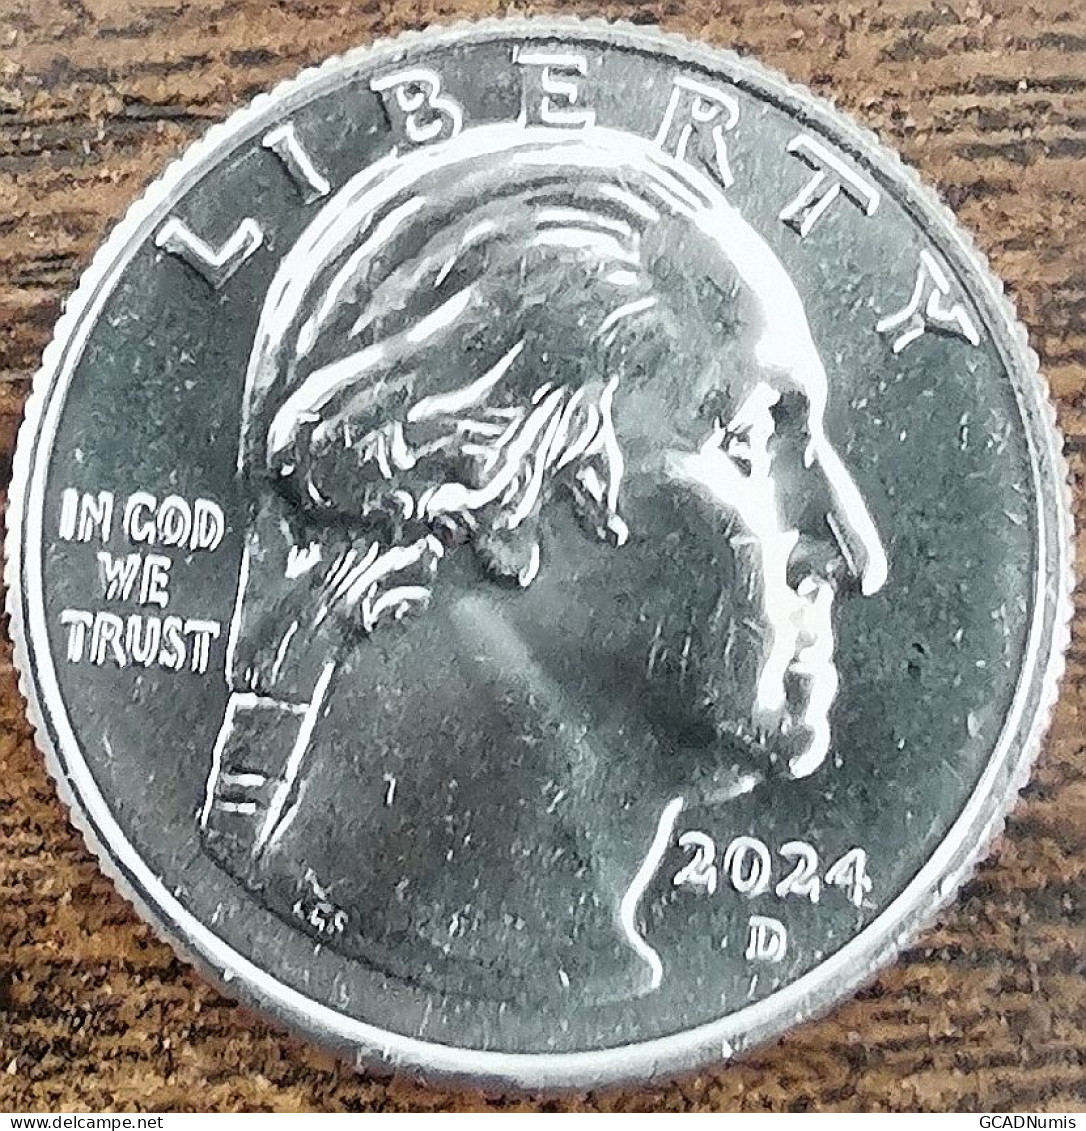 Quarter Dollar USA Patsy TAKEMOTO MINK - 2024 D - LIBERTY - American Woman - Unclassified